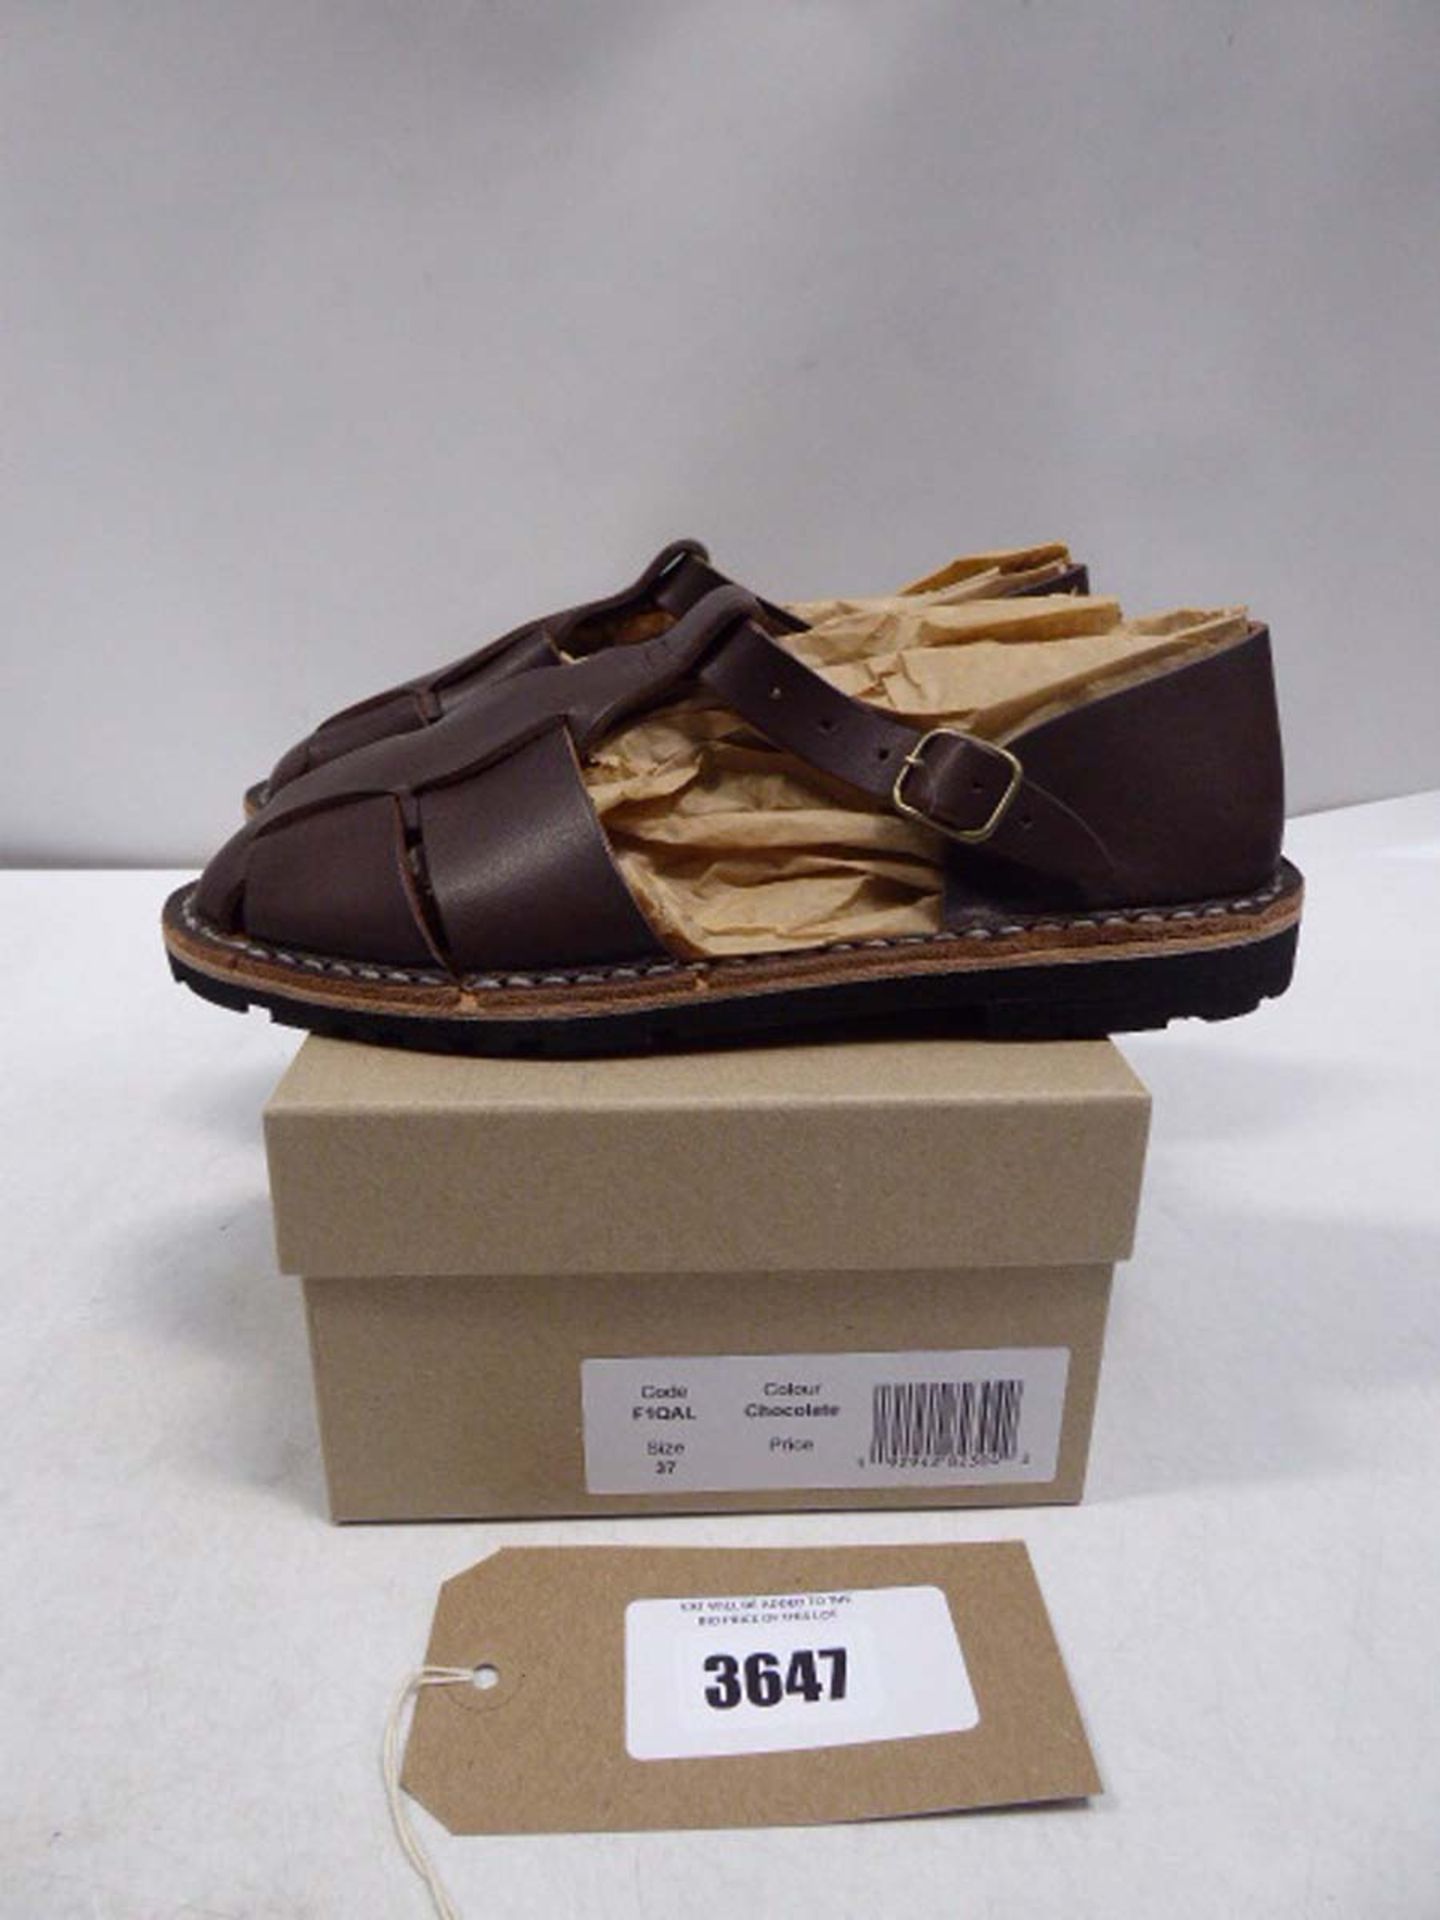 Steve Mono Artisinal Chocolate sandals size EU 37